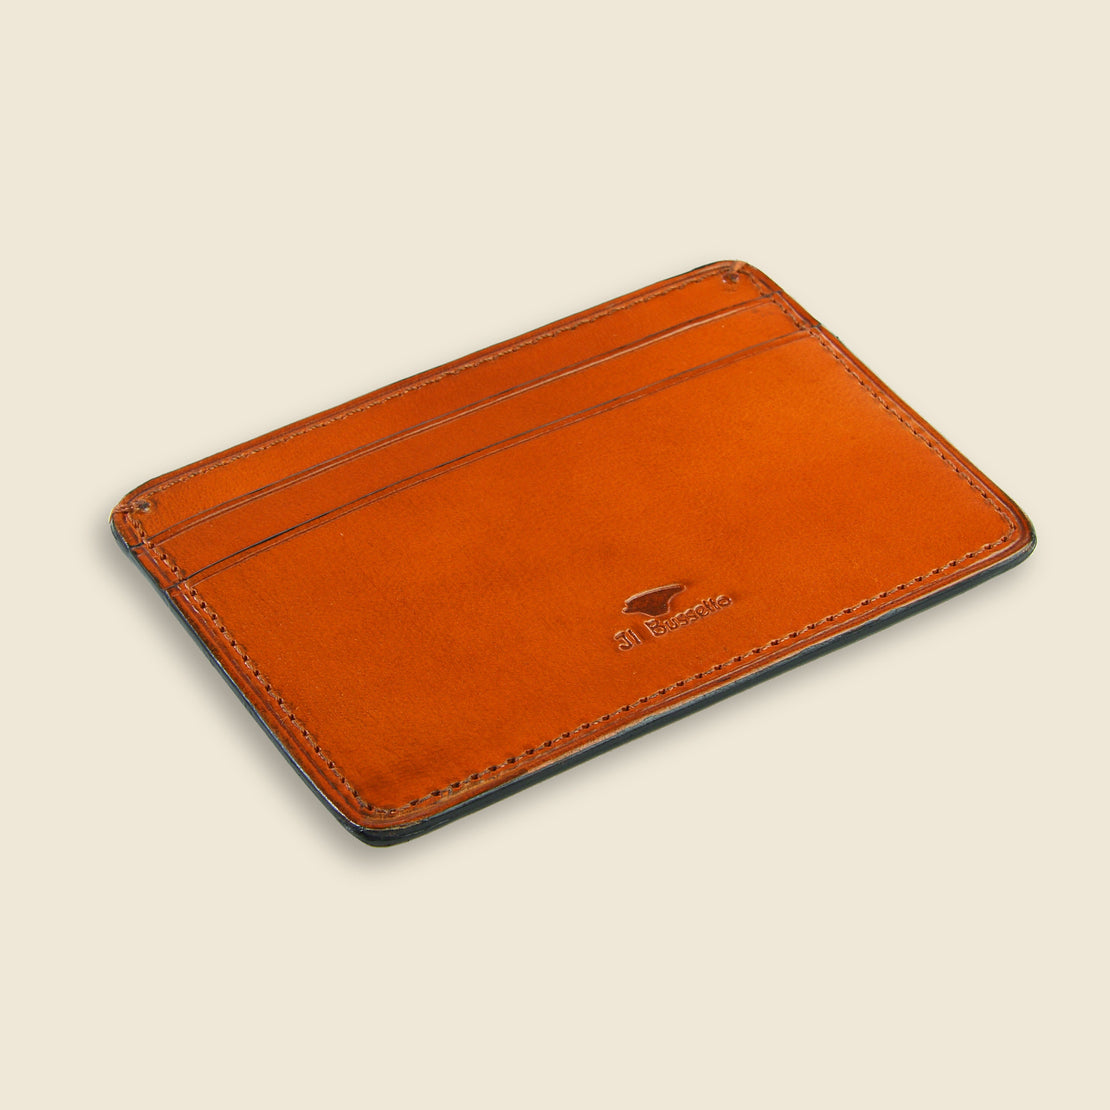 Credit Card Case - Orange - Il Bussetto - STAG Provisions - Accessories - Wallets